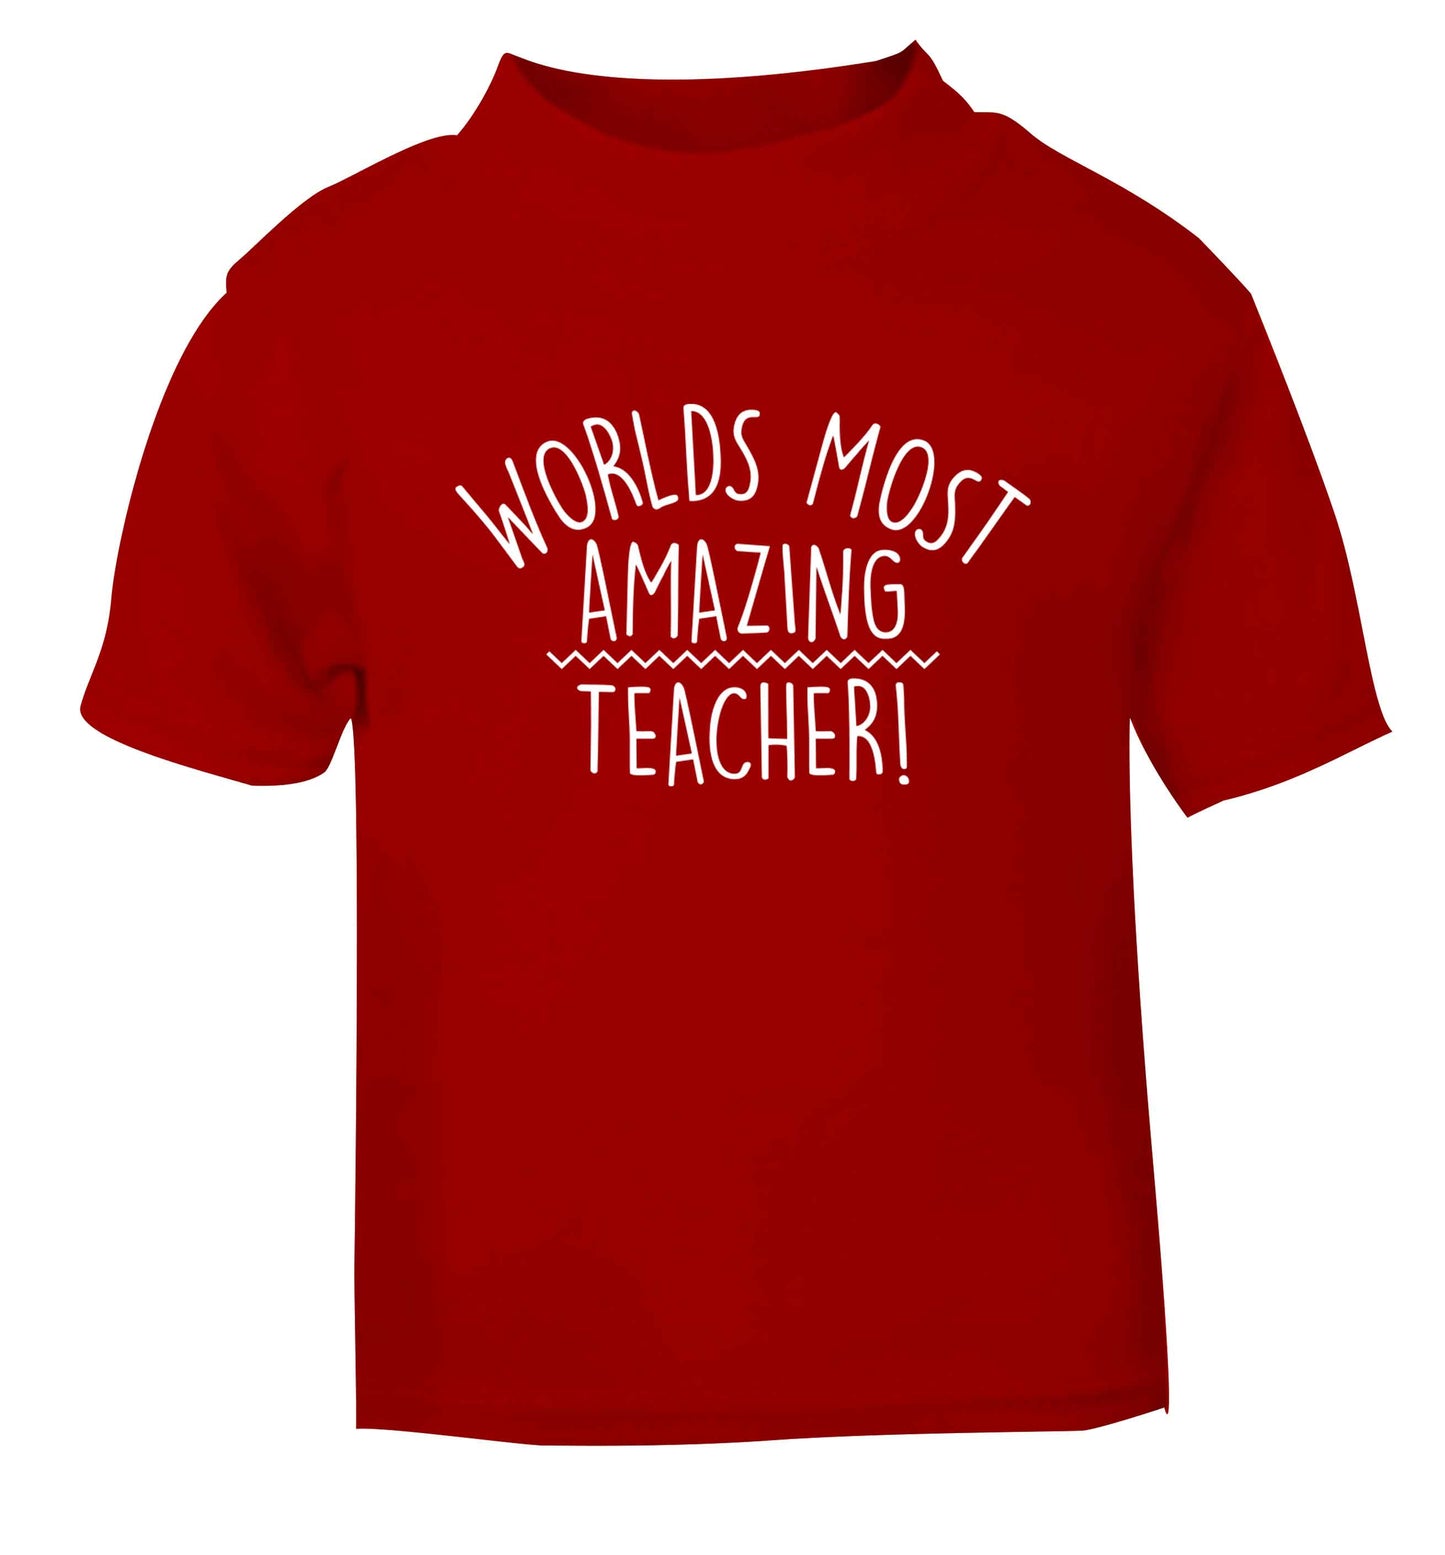 Worlds most amazing teacher red baby toddler Tshirt 2 Years